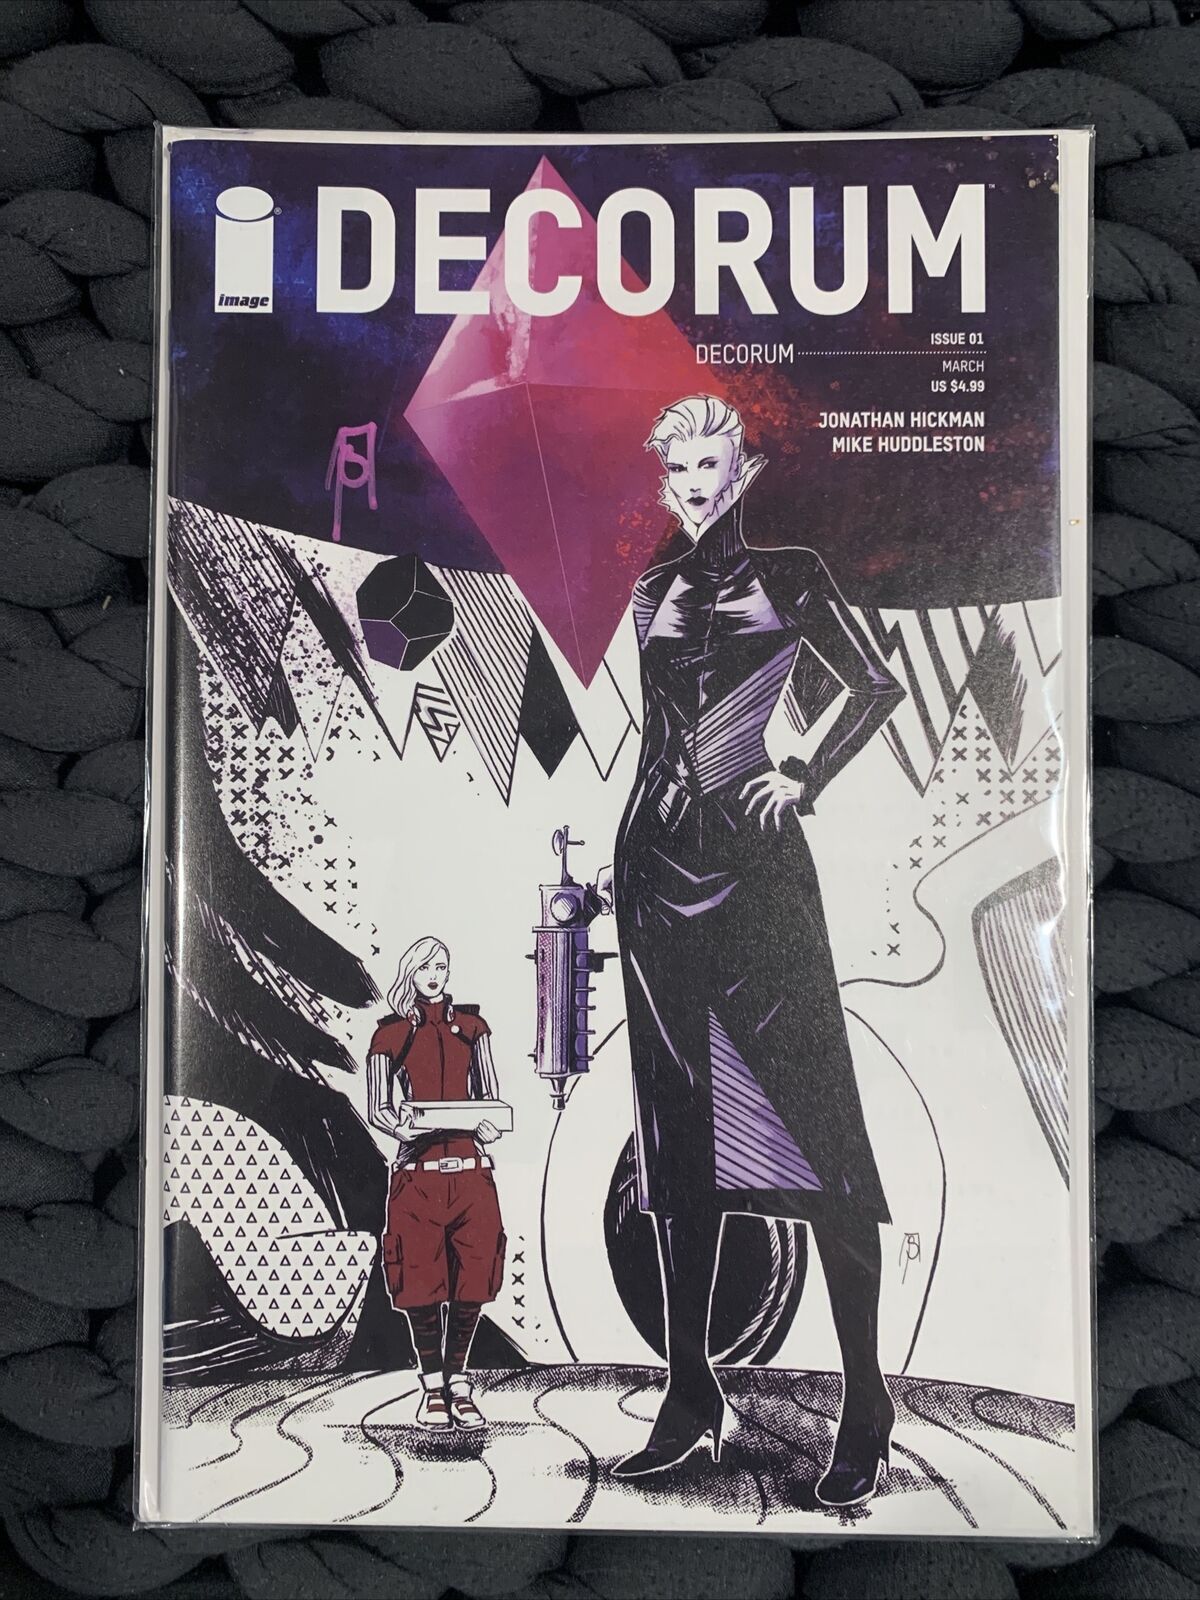 Decorum #1 Exclusive Variant #475/500 Signed by Joseph Schmalke w/ COA (Image)